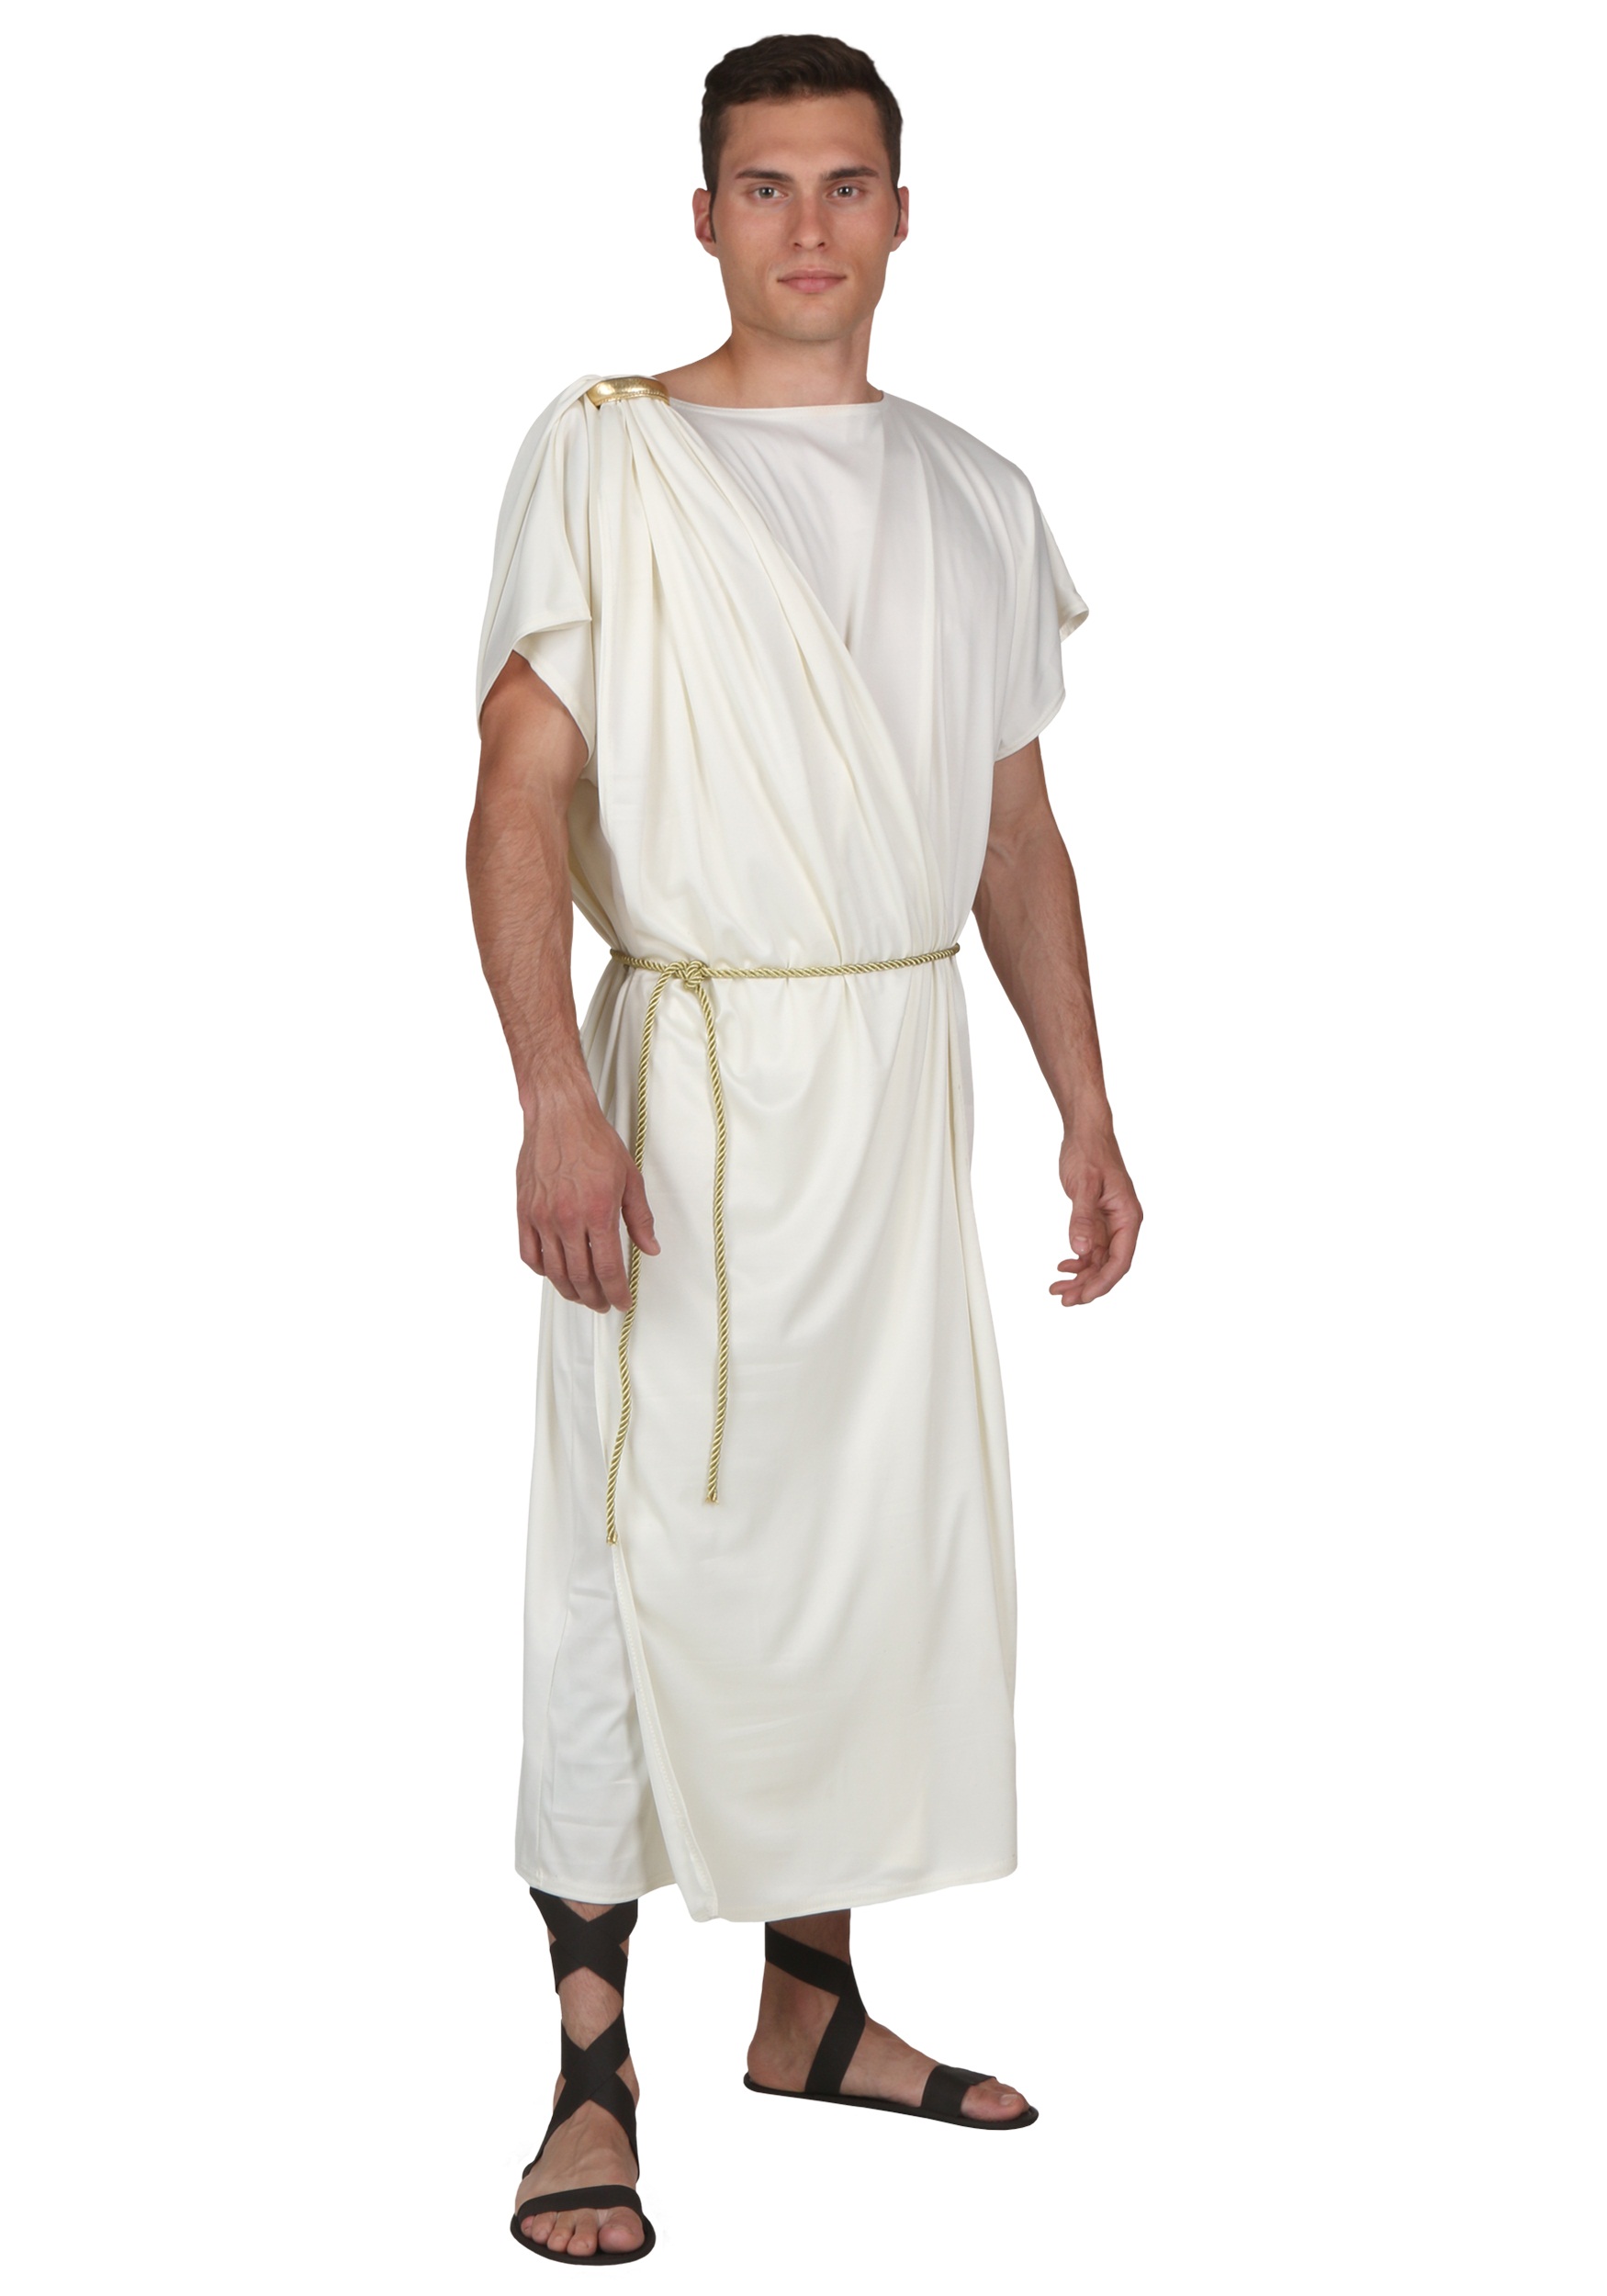 Plus Size Toga Halloween Costume For Men , Greek Costume